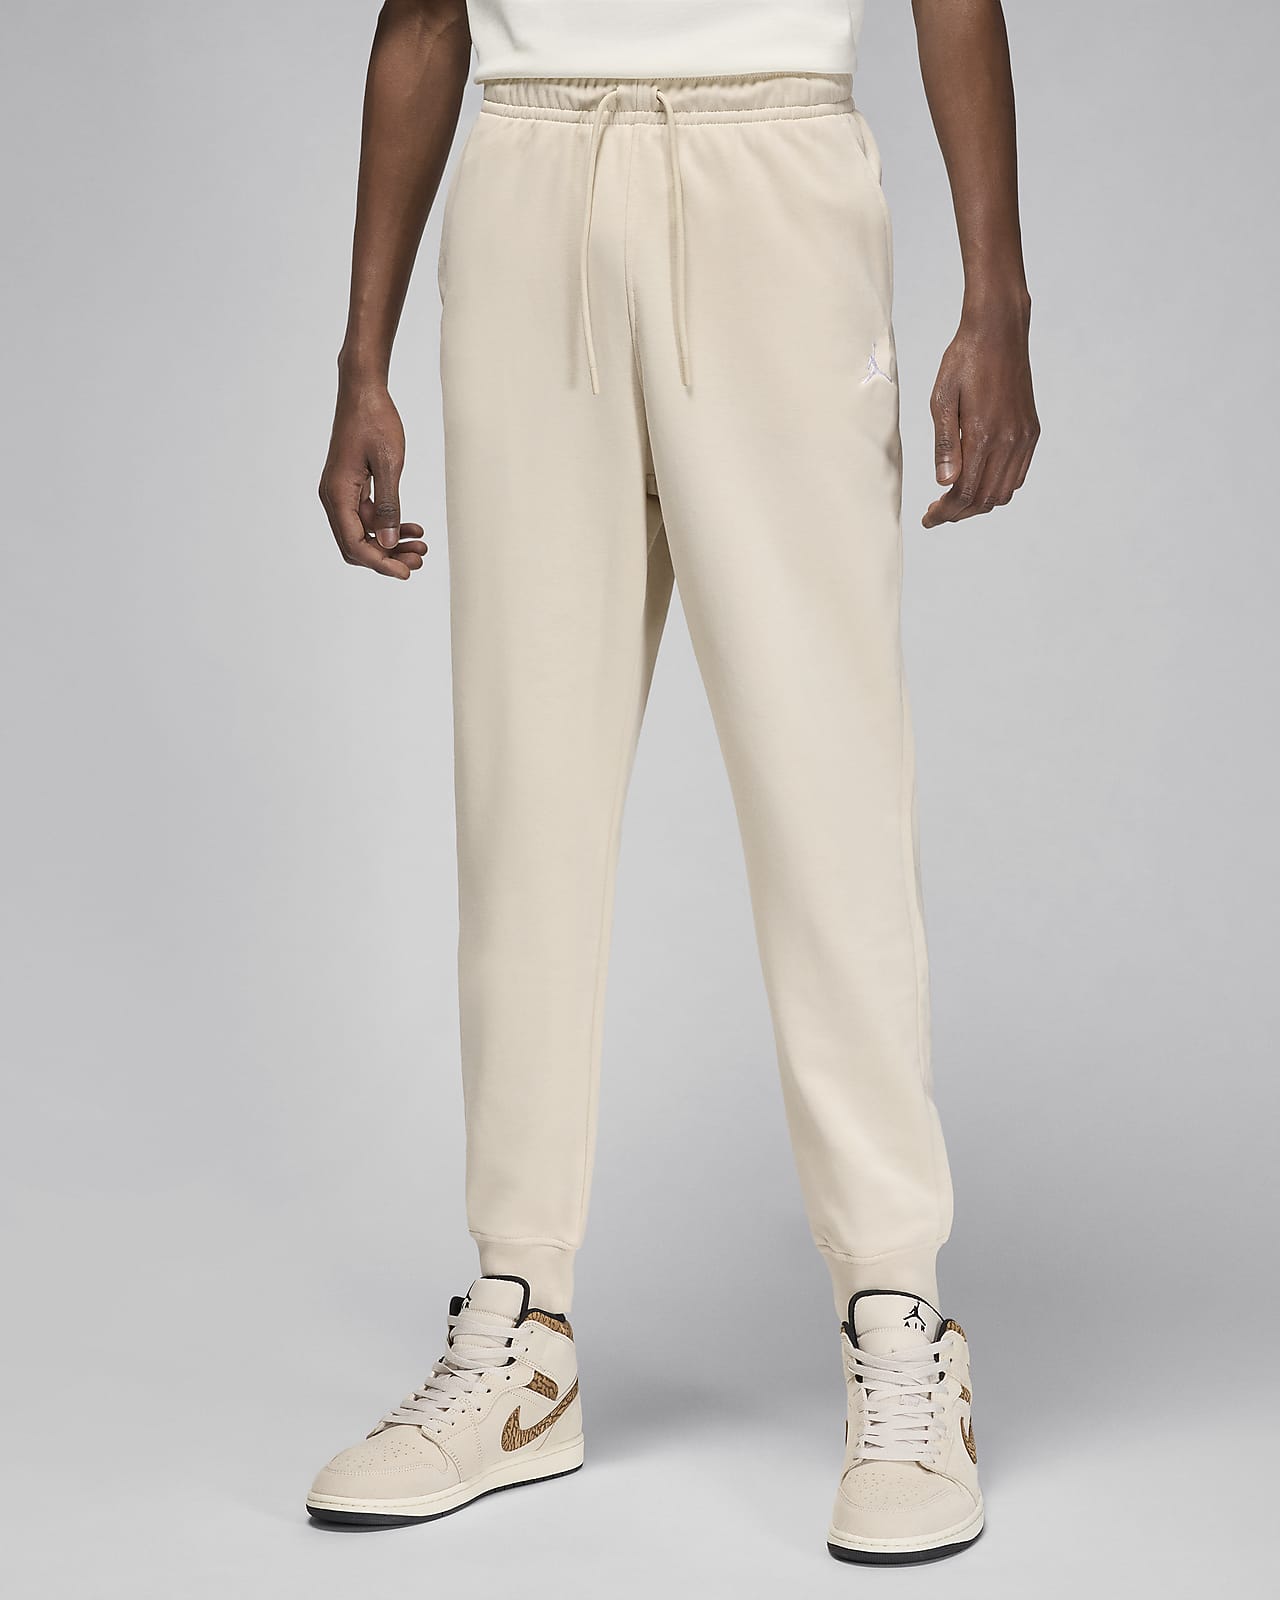 Jordan Essentials Pantalón de tejido Fleece de rizo - Hombre